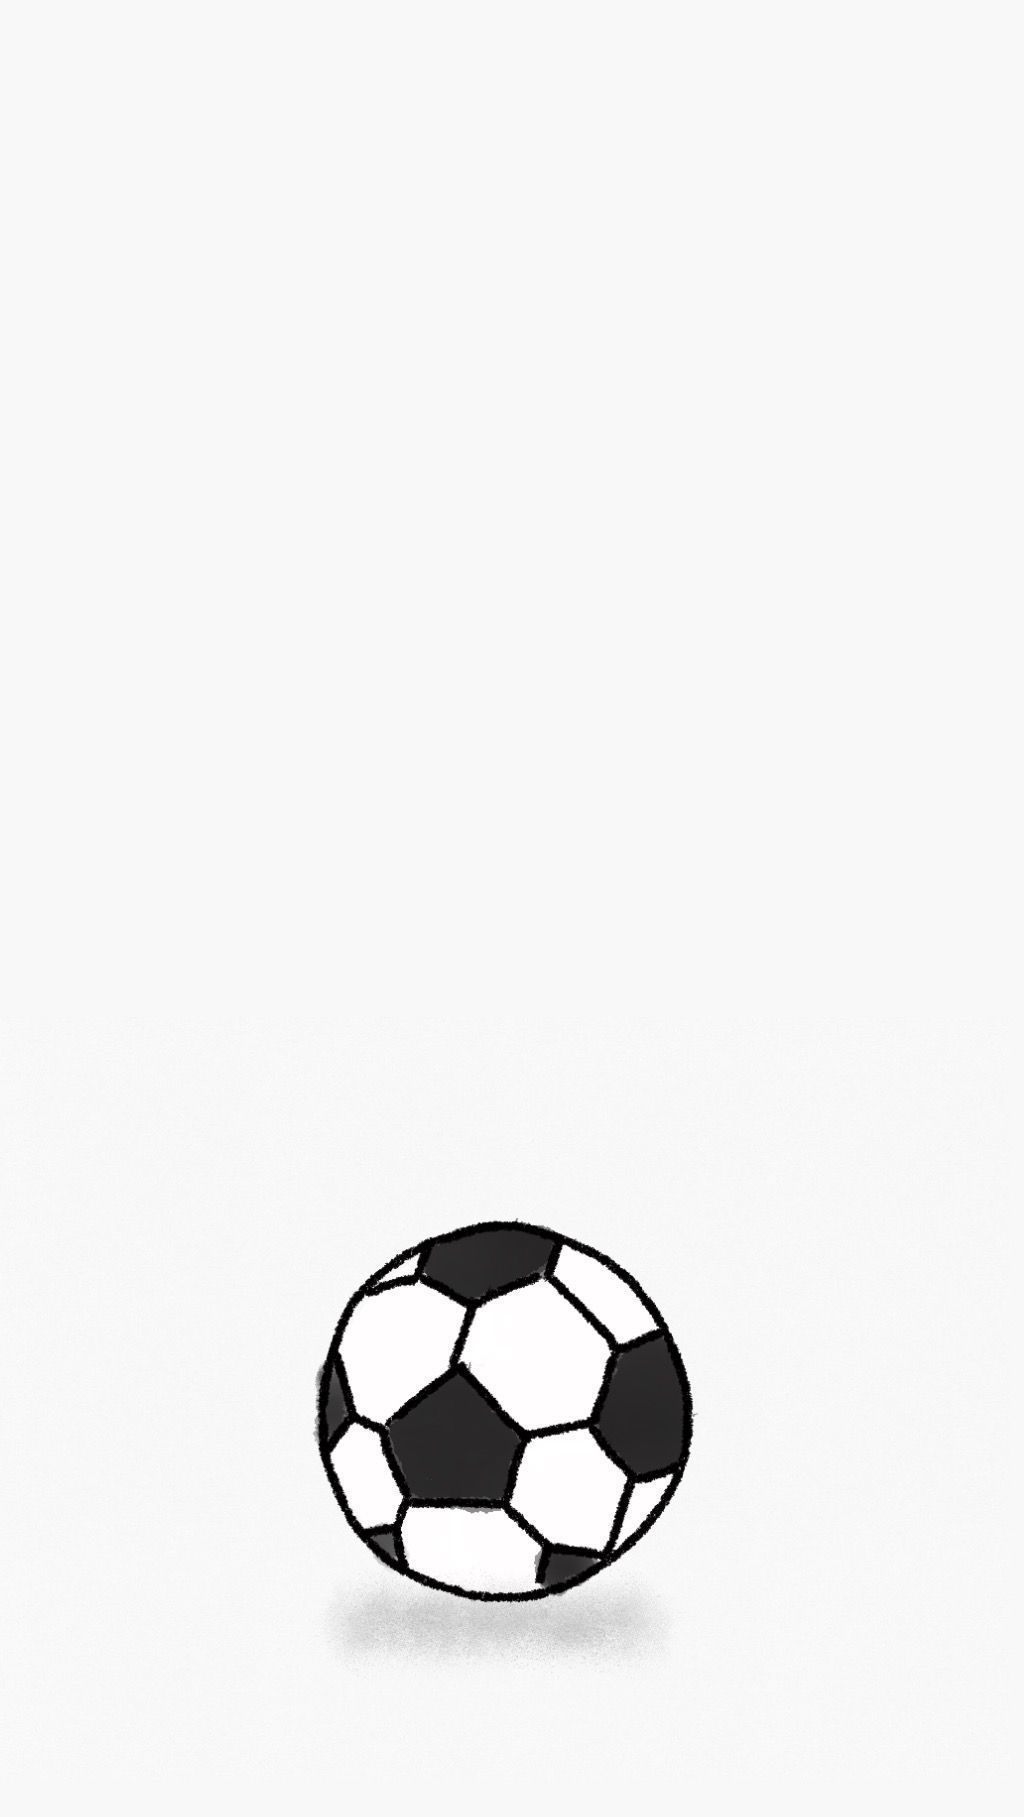 football #ball #wallpaper #wallpaperiphone. Football wallpaper iphone, Cute soccer picture, Soccer background